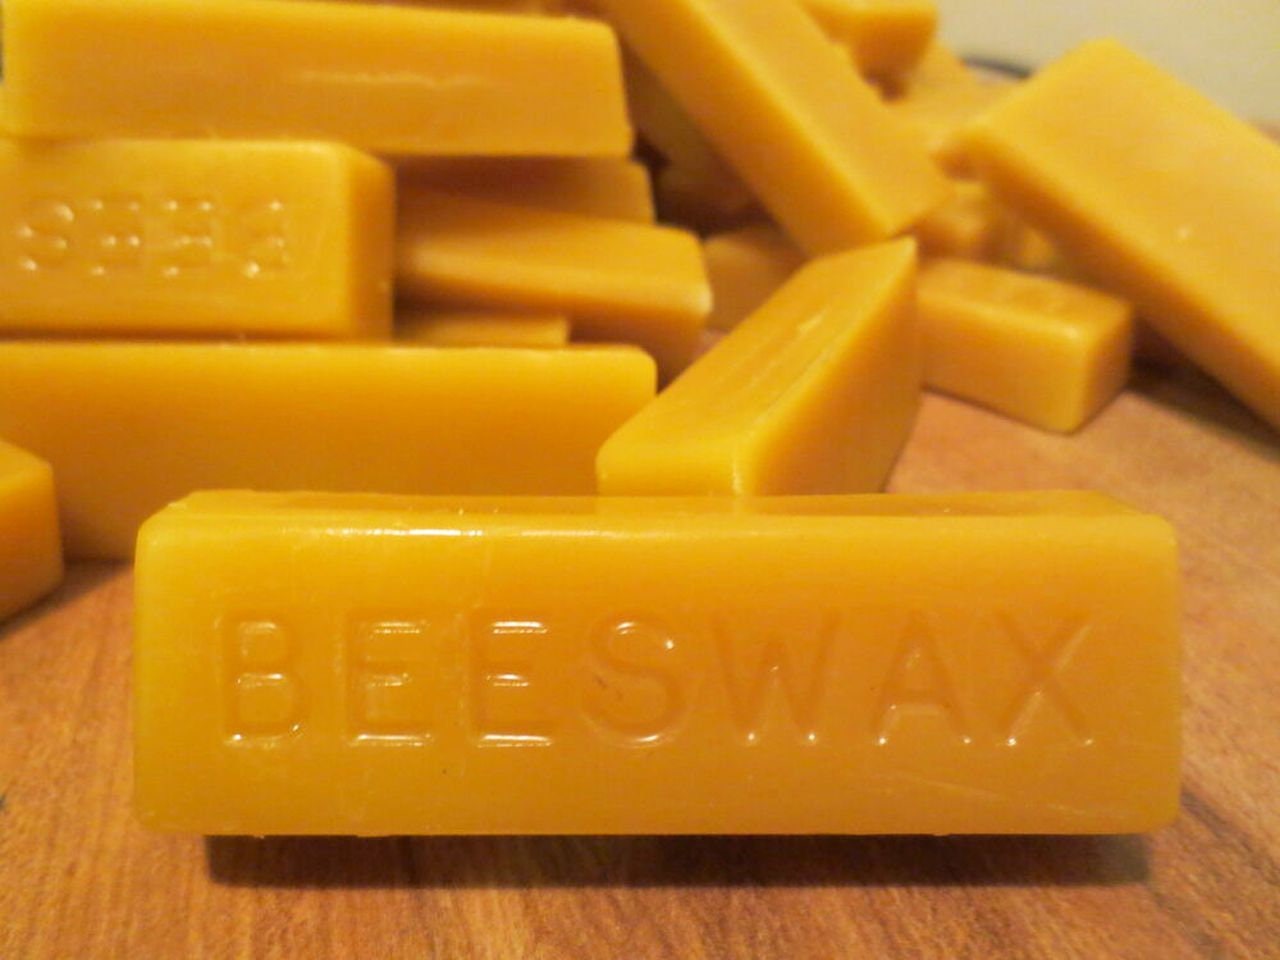 The Beadsmith® Beeswax Bar, 1oz.